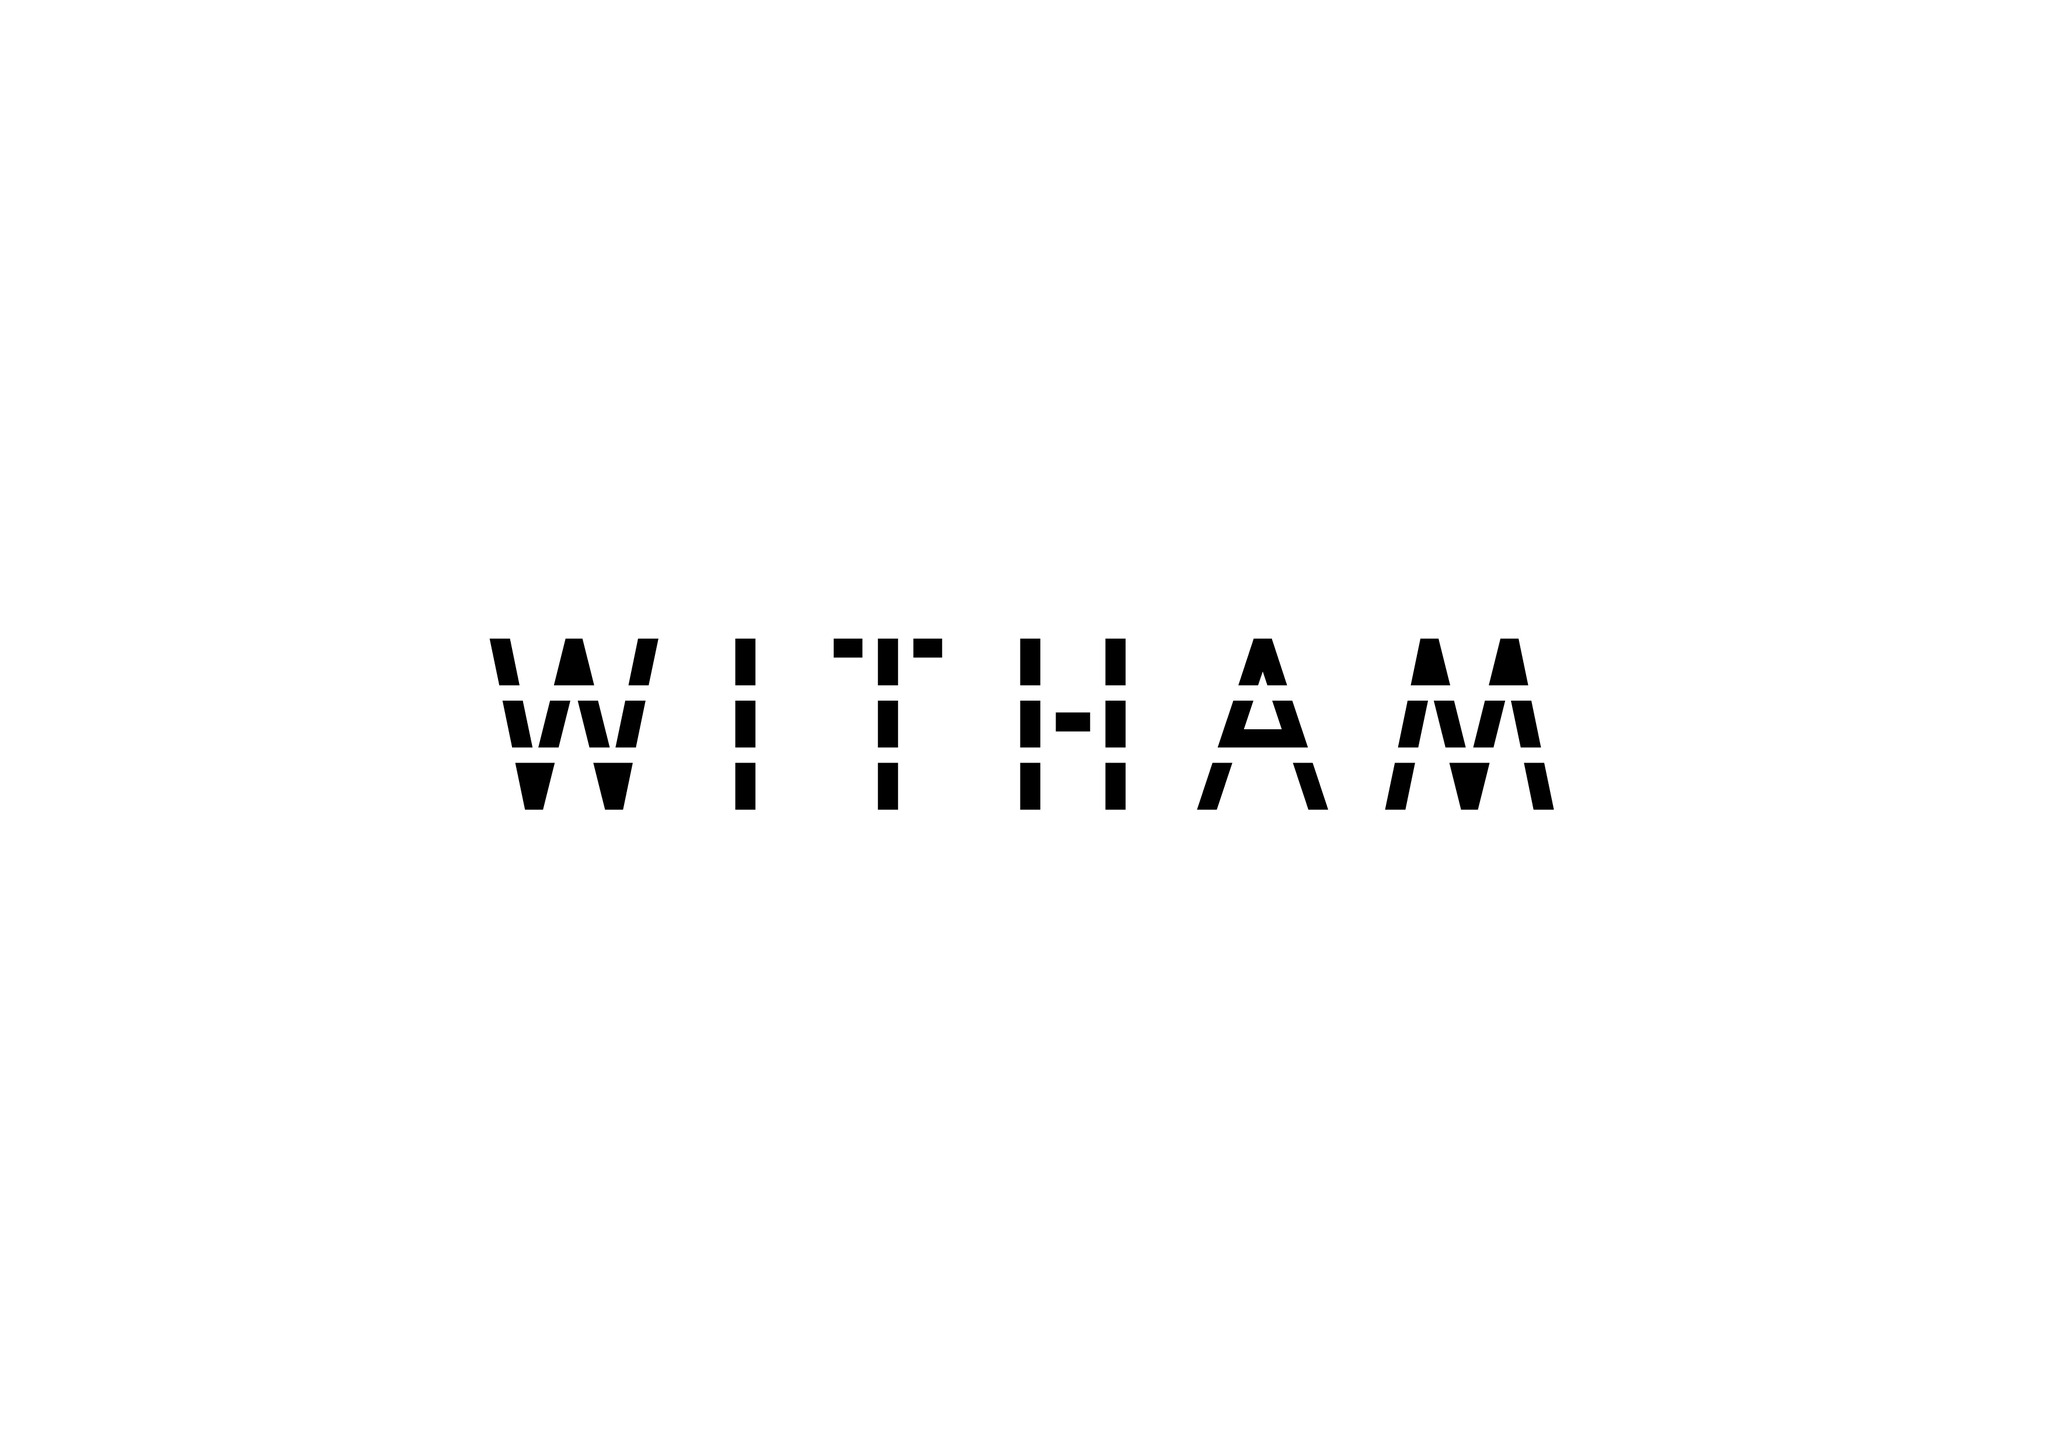 WITHAM